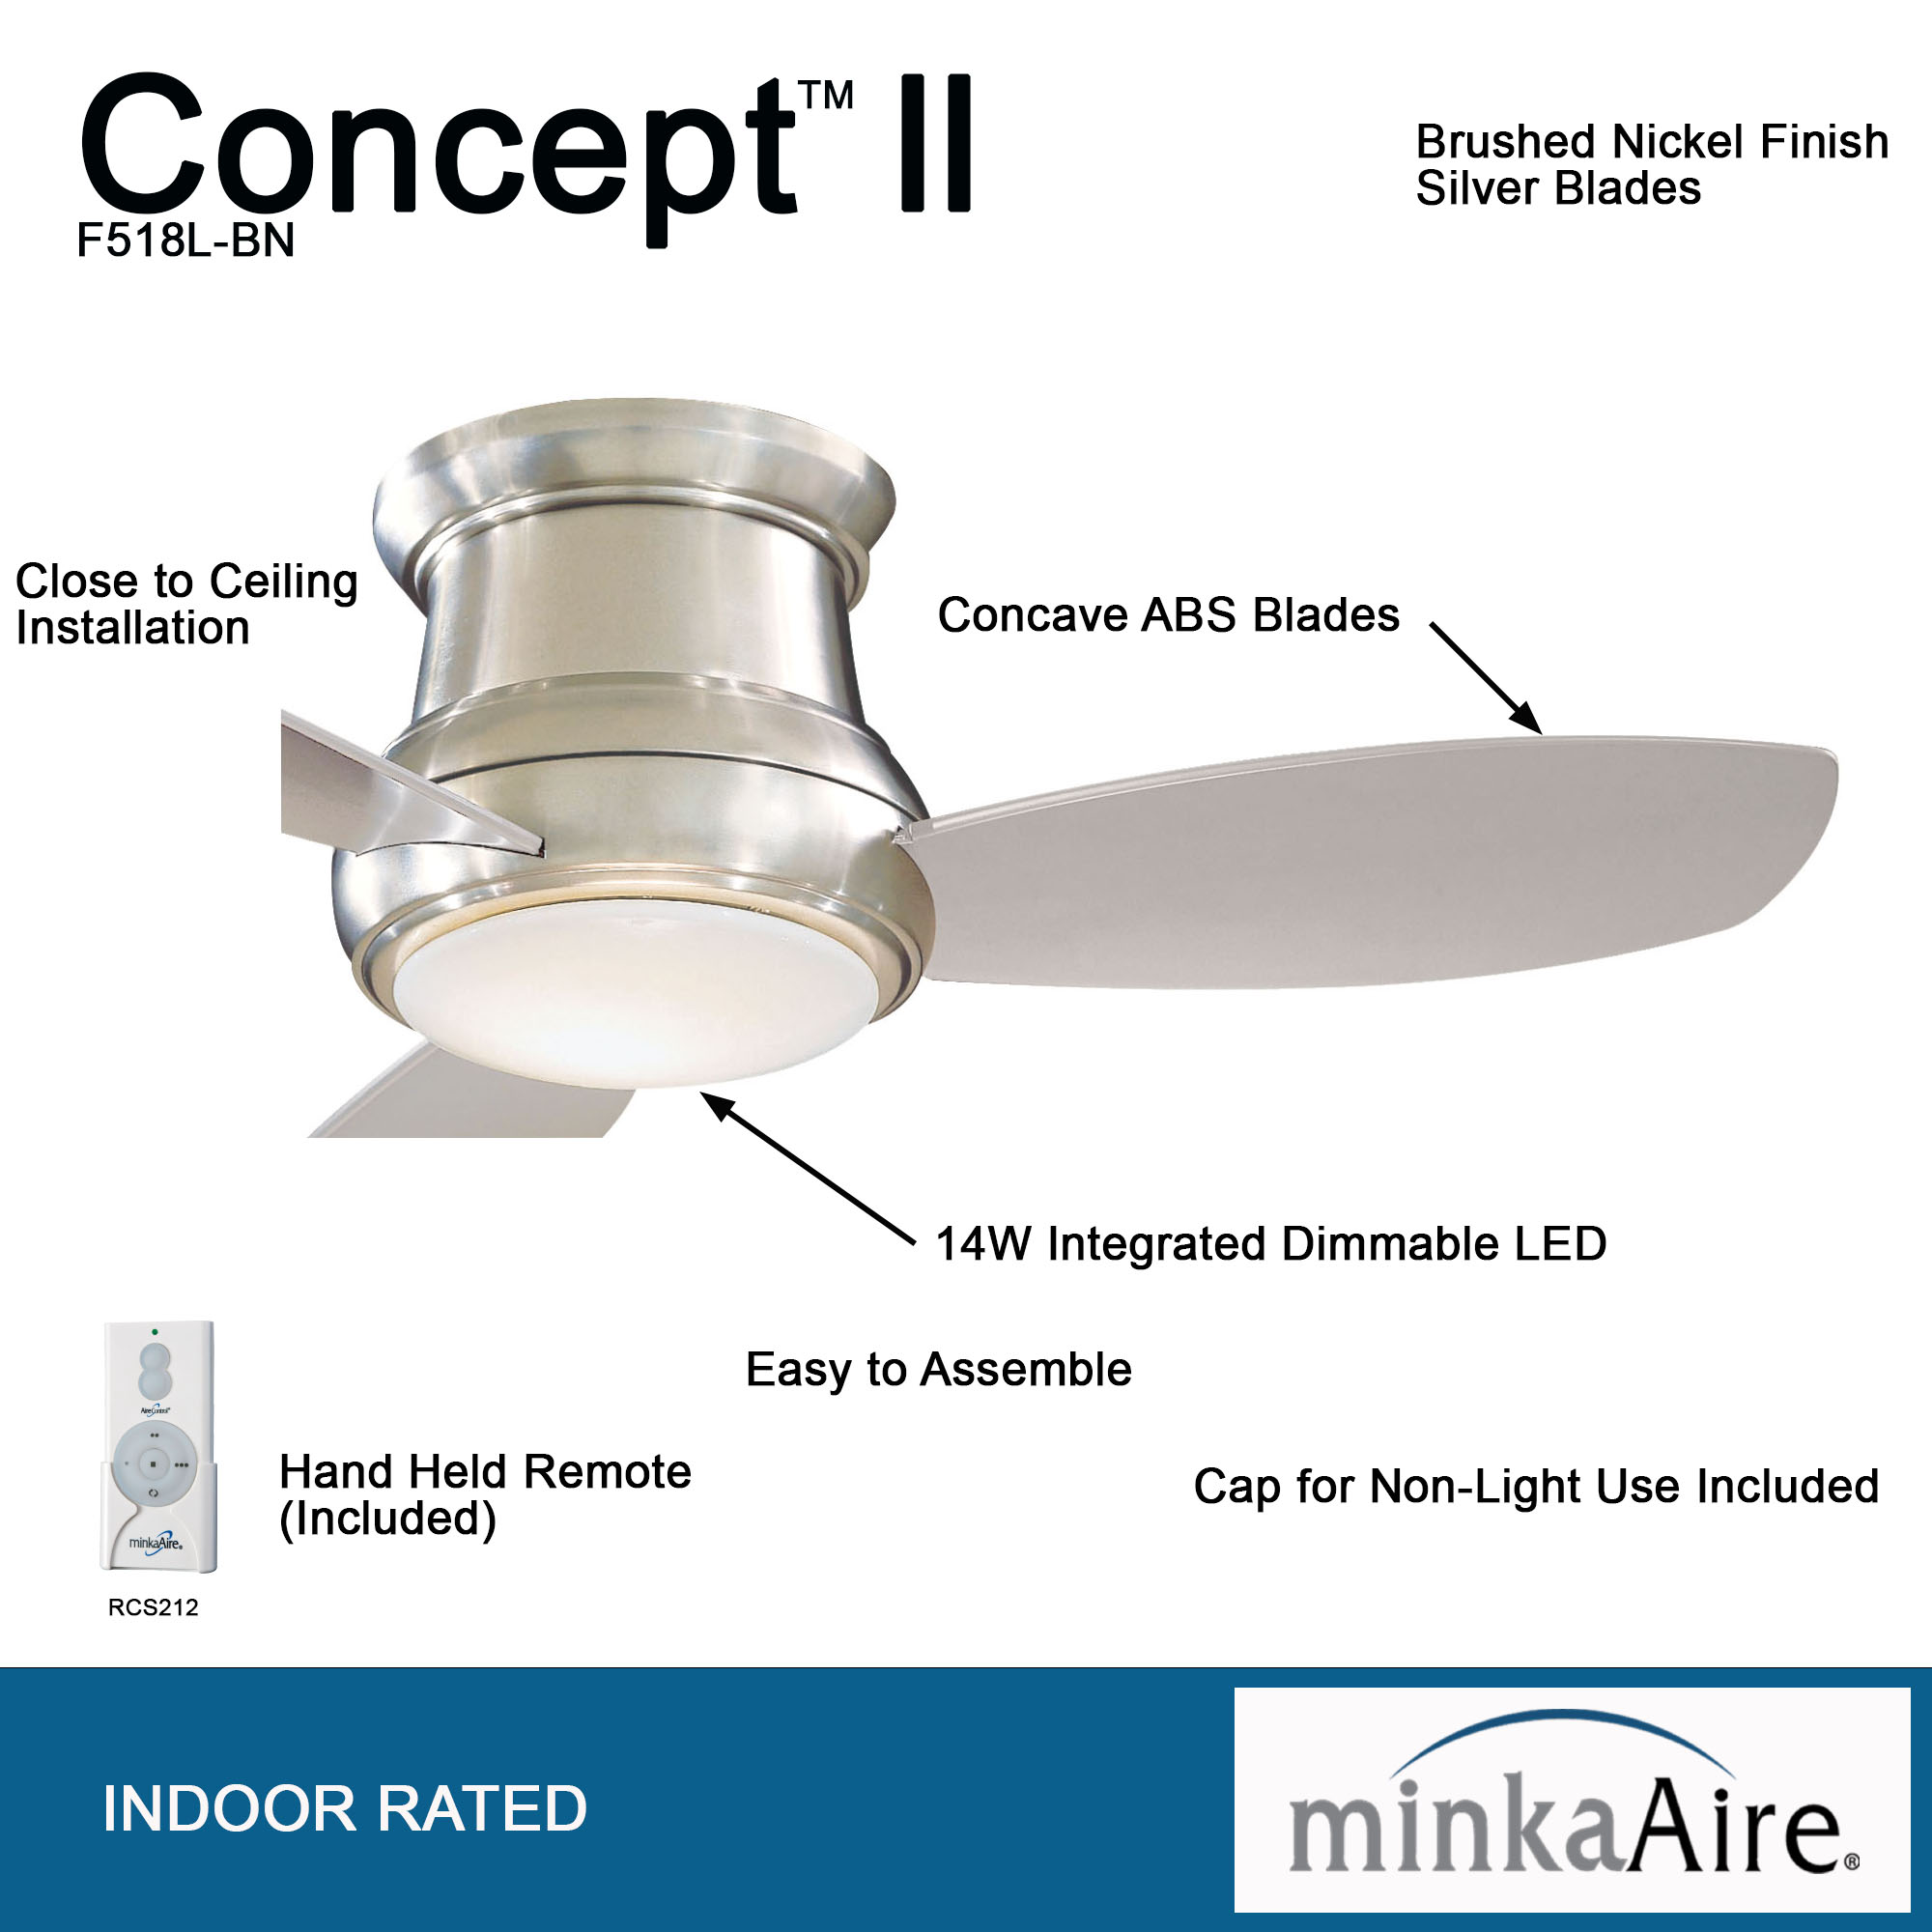 Concept™ II - LED 44" Ceiling Fan